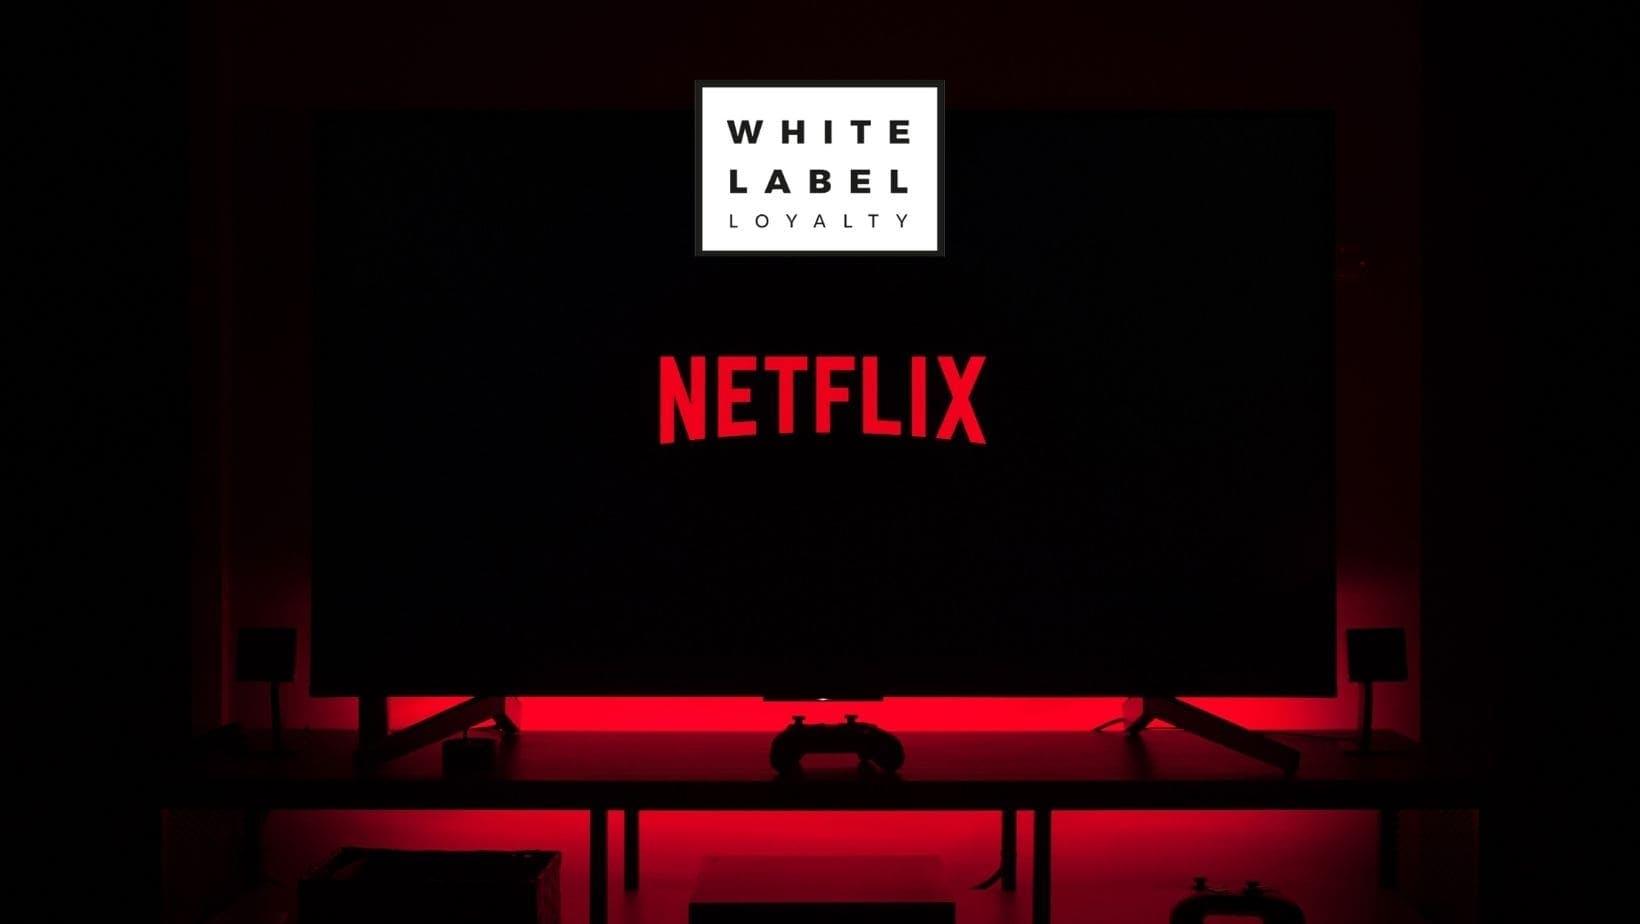 How does Netflix create Customer Loyalty?